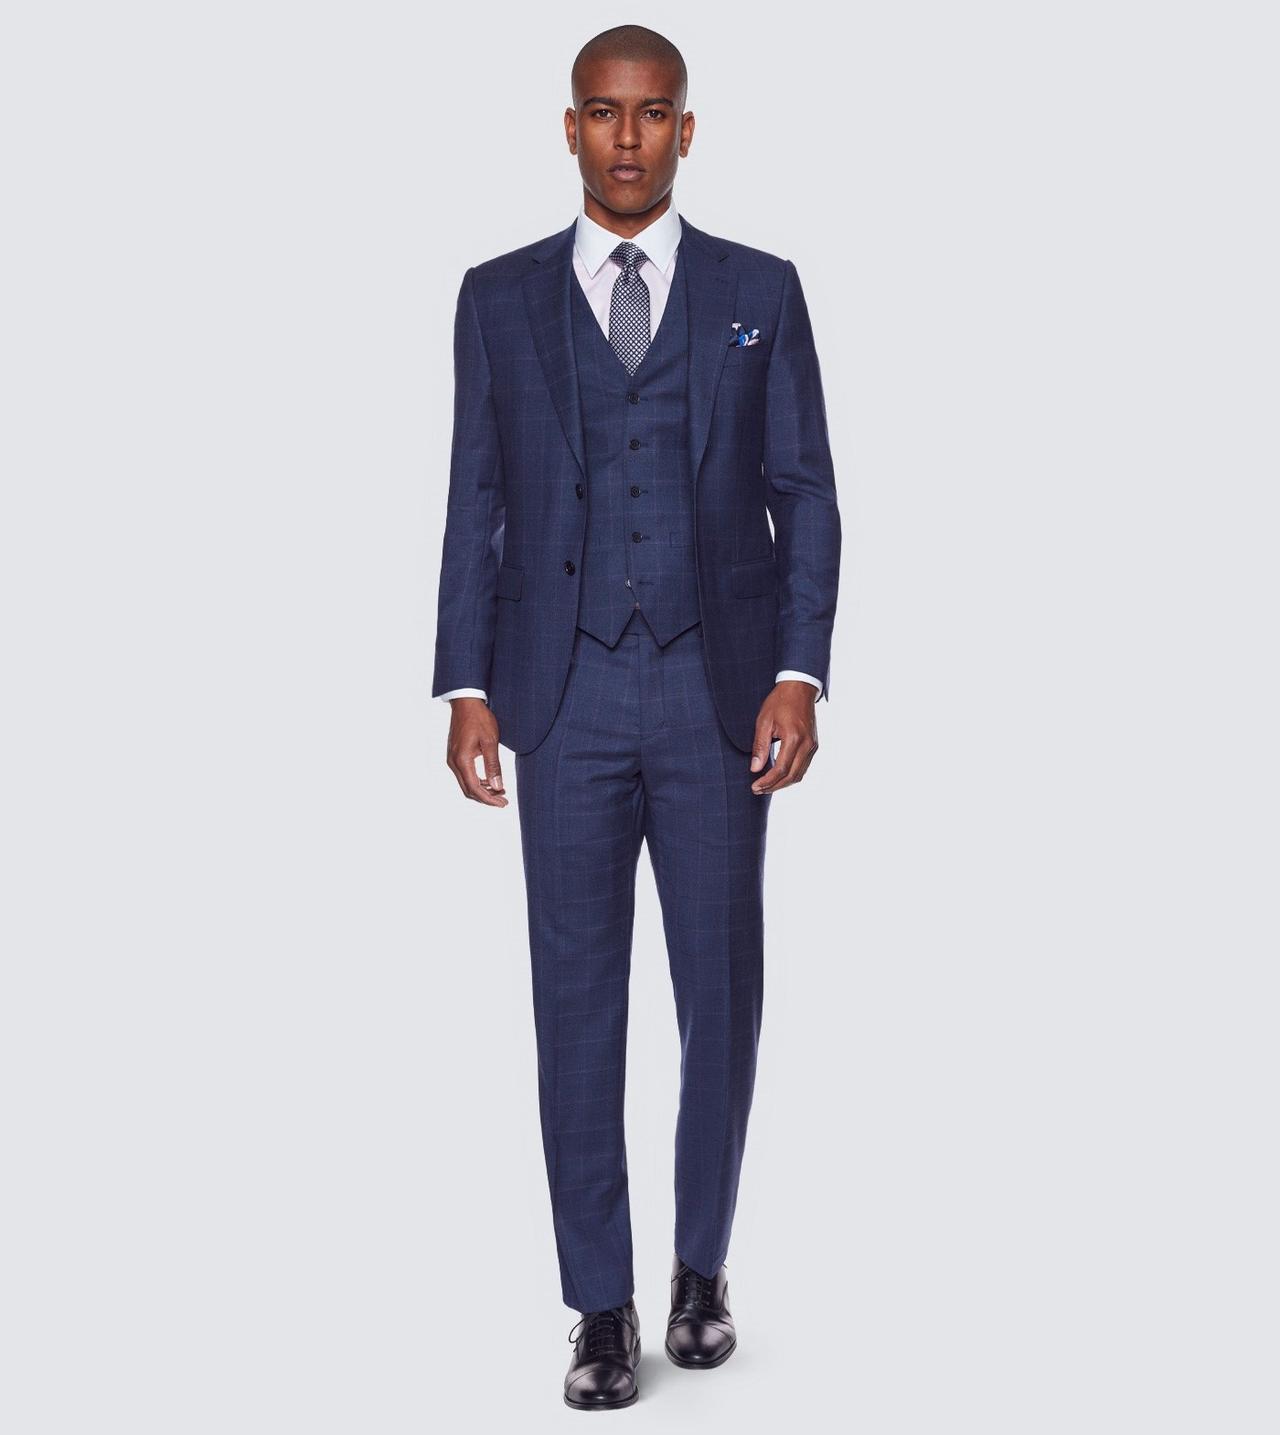 Business Casual Dress Code & Attire for Men - SuitsExpert.com